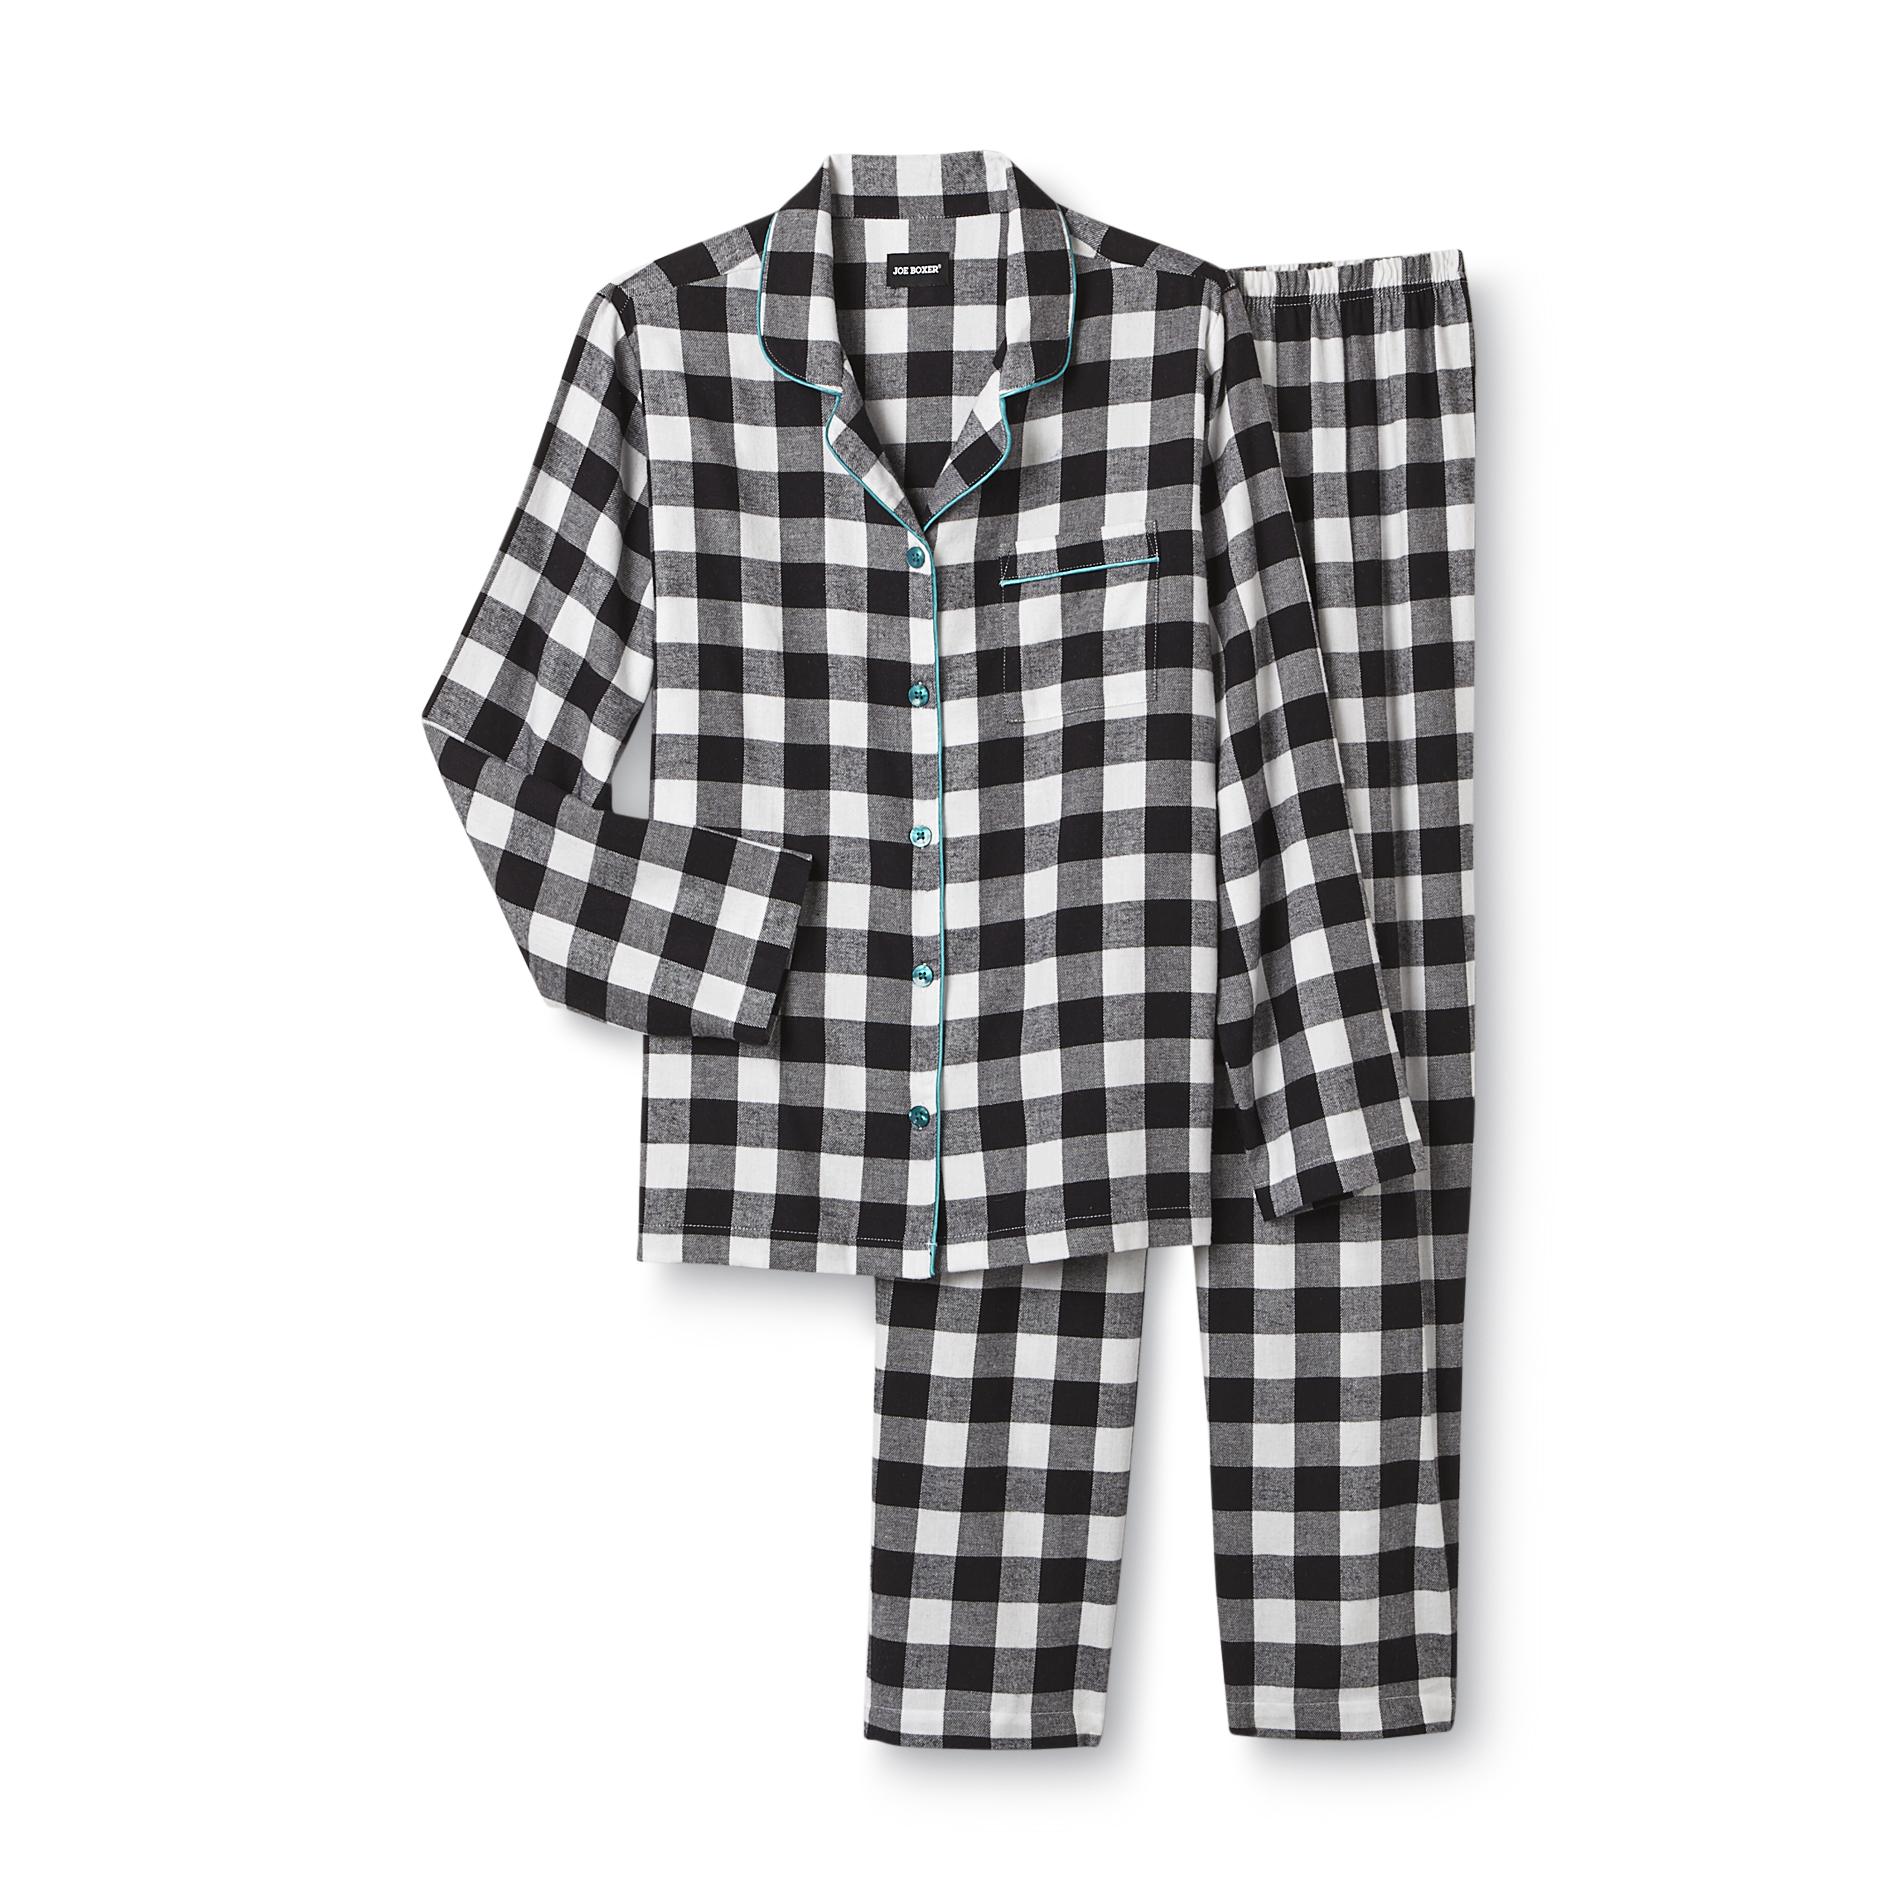 Joe Boxer Women's Plus 2-Piece Flannel Pajama Set - Checkered